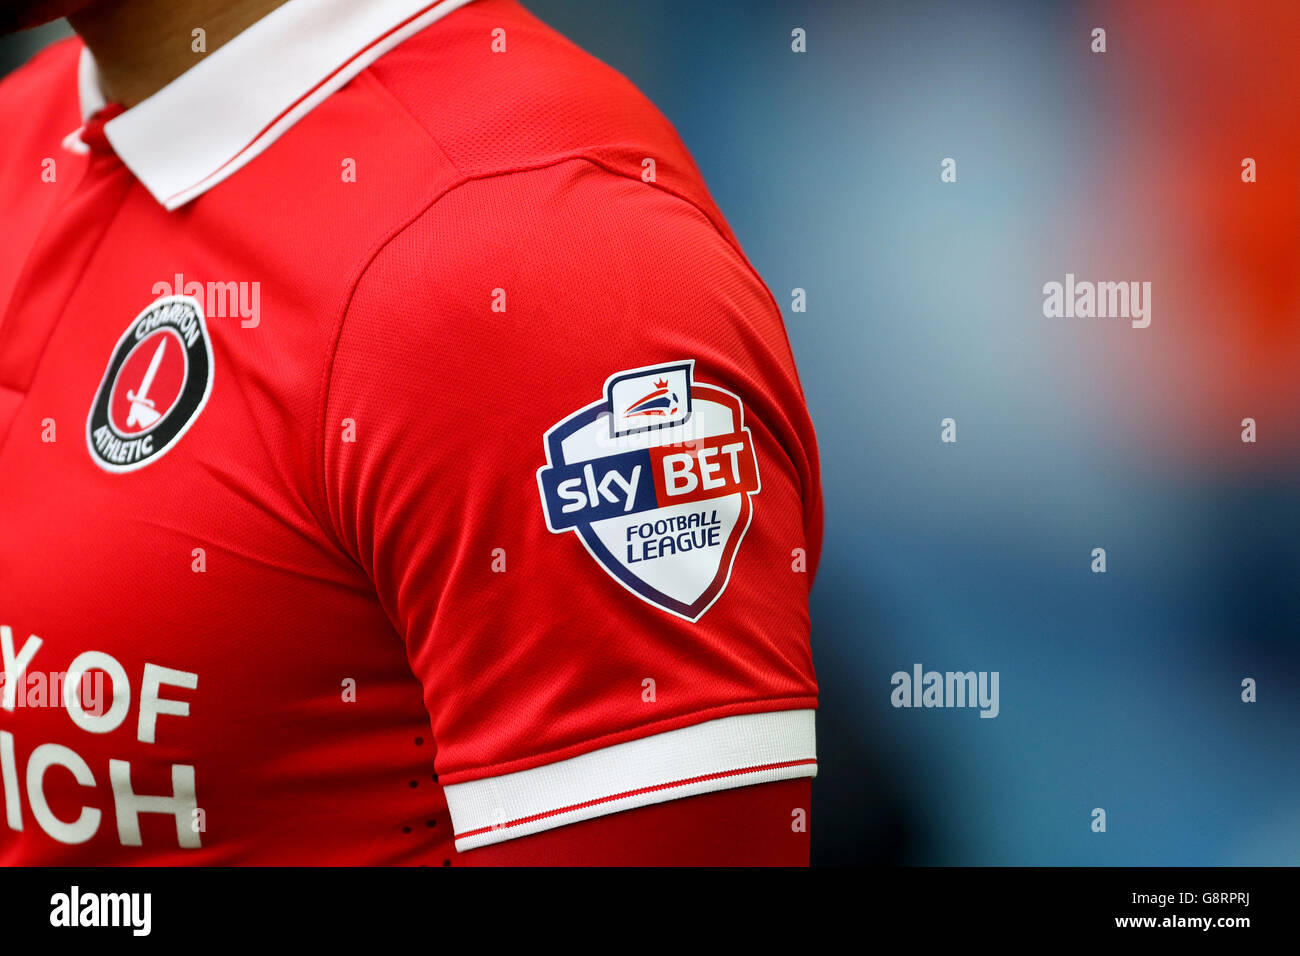 Charlton football shirt hi-res stock photography and images - Alamy